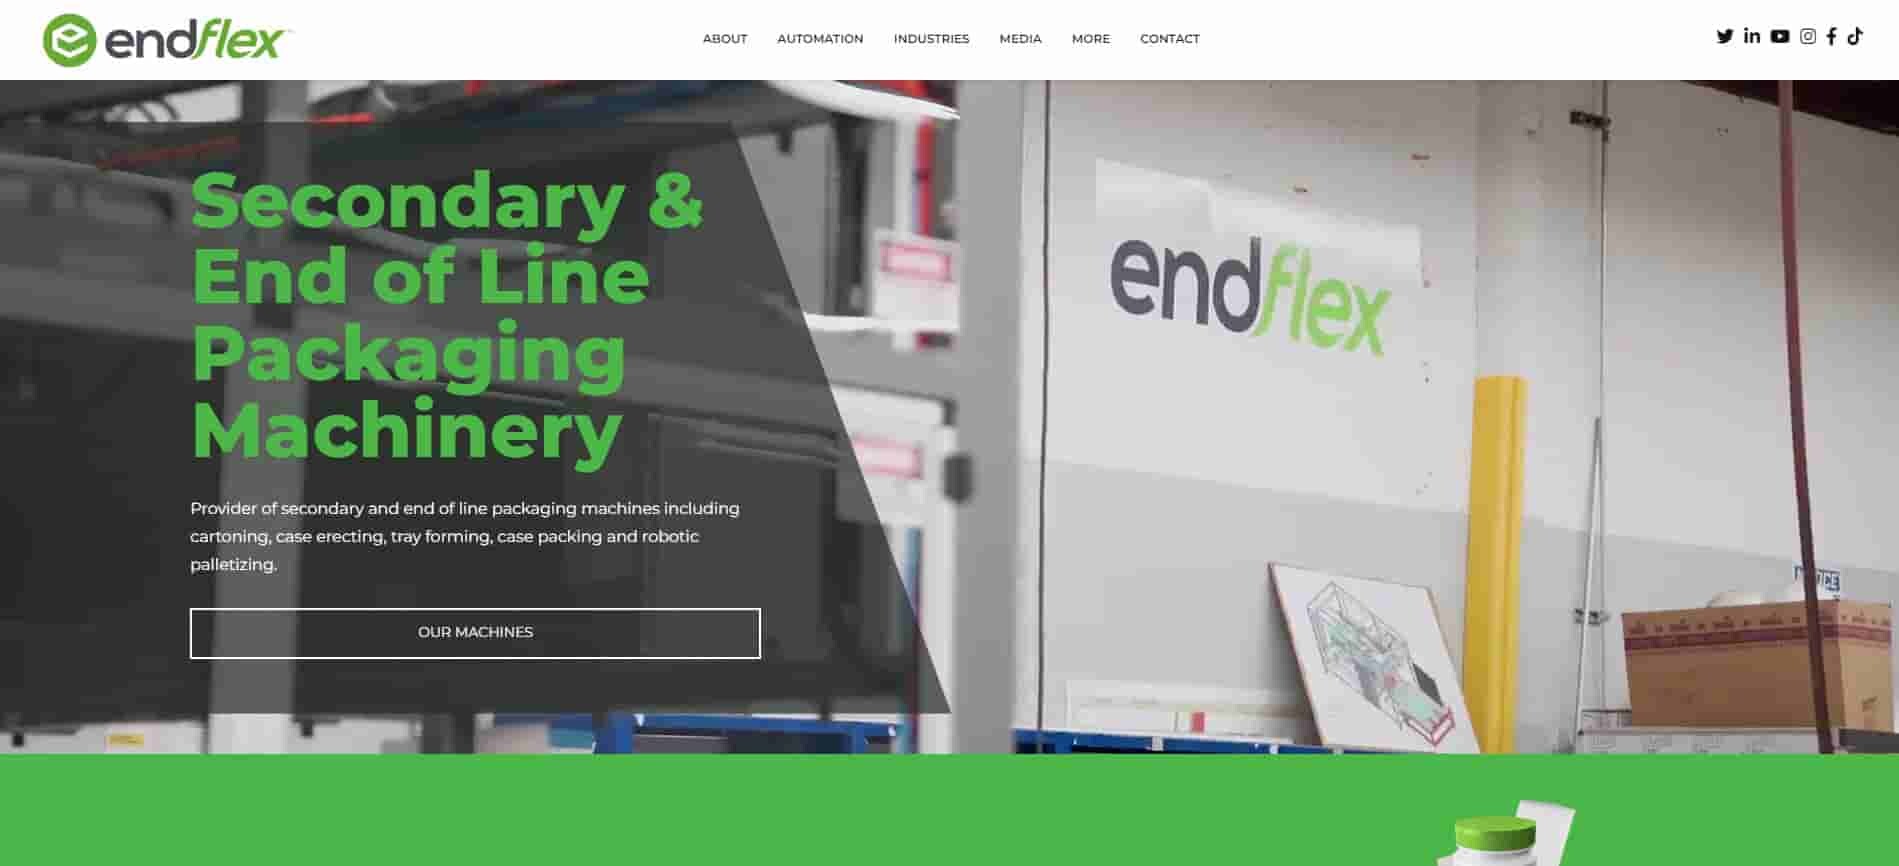 EndFlex site